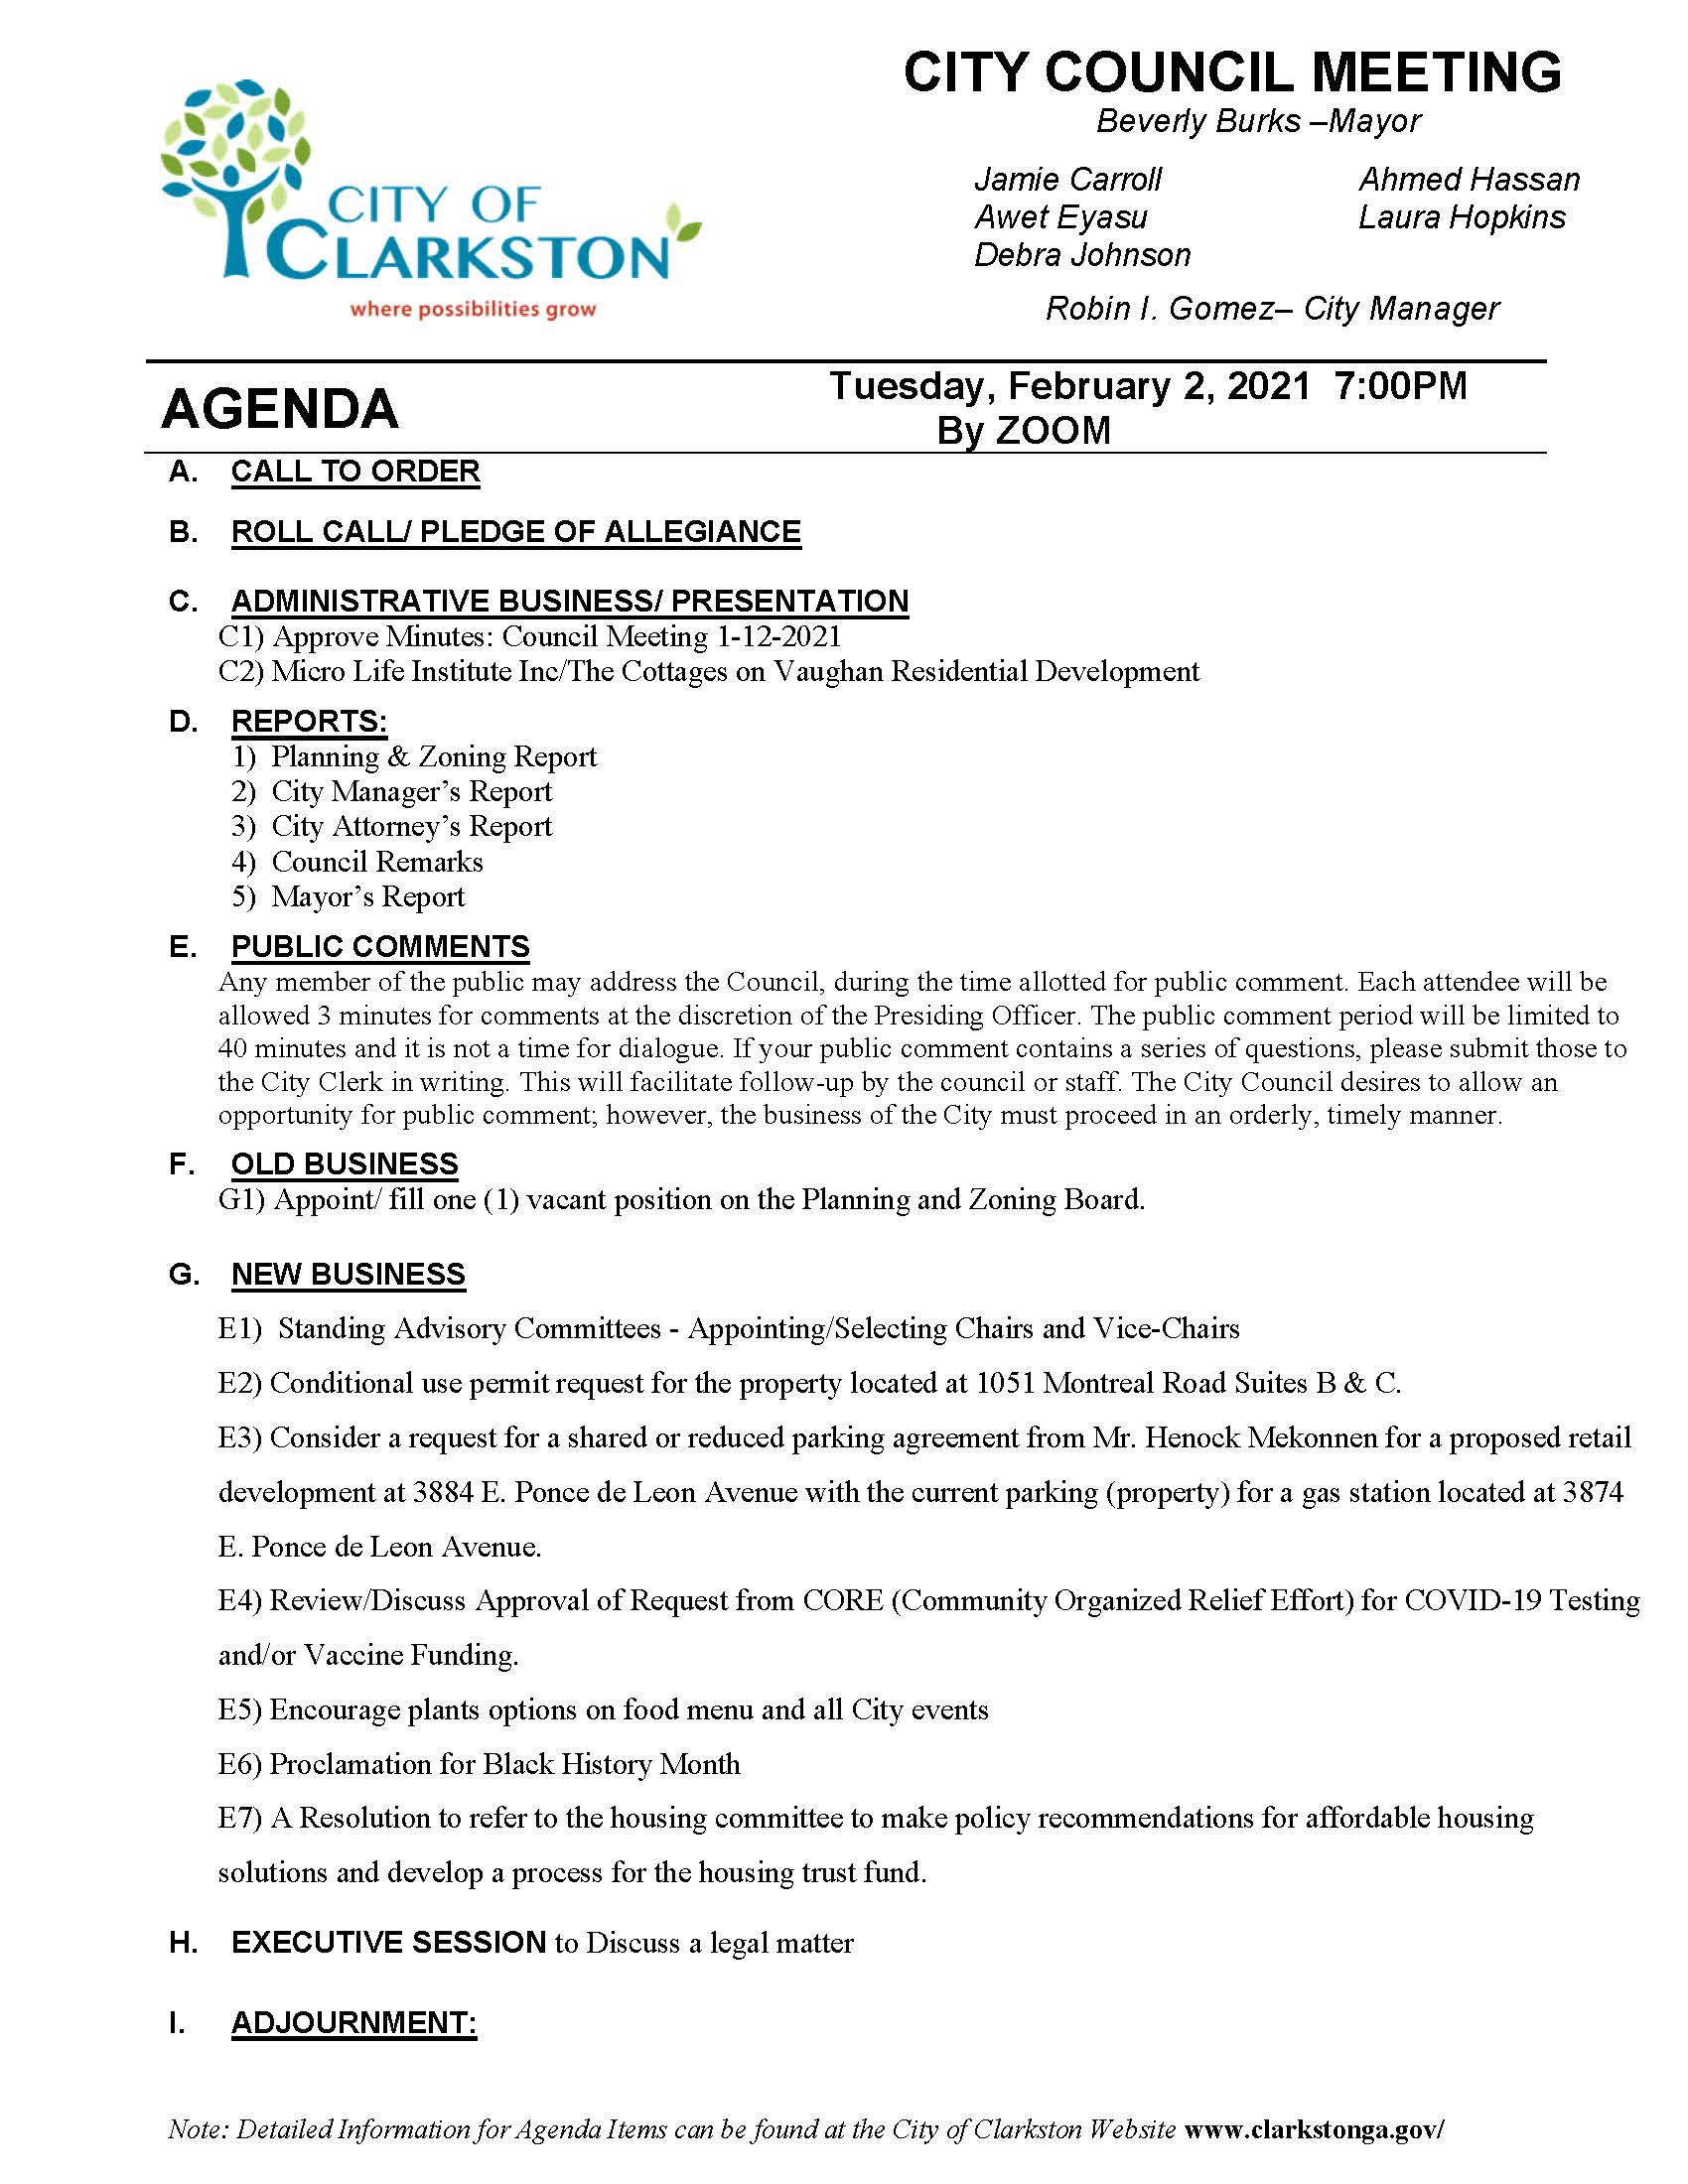 council meeting agenda 2-2-2021